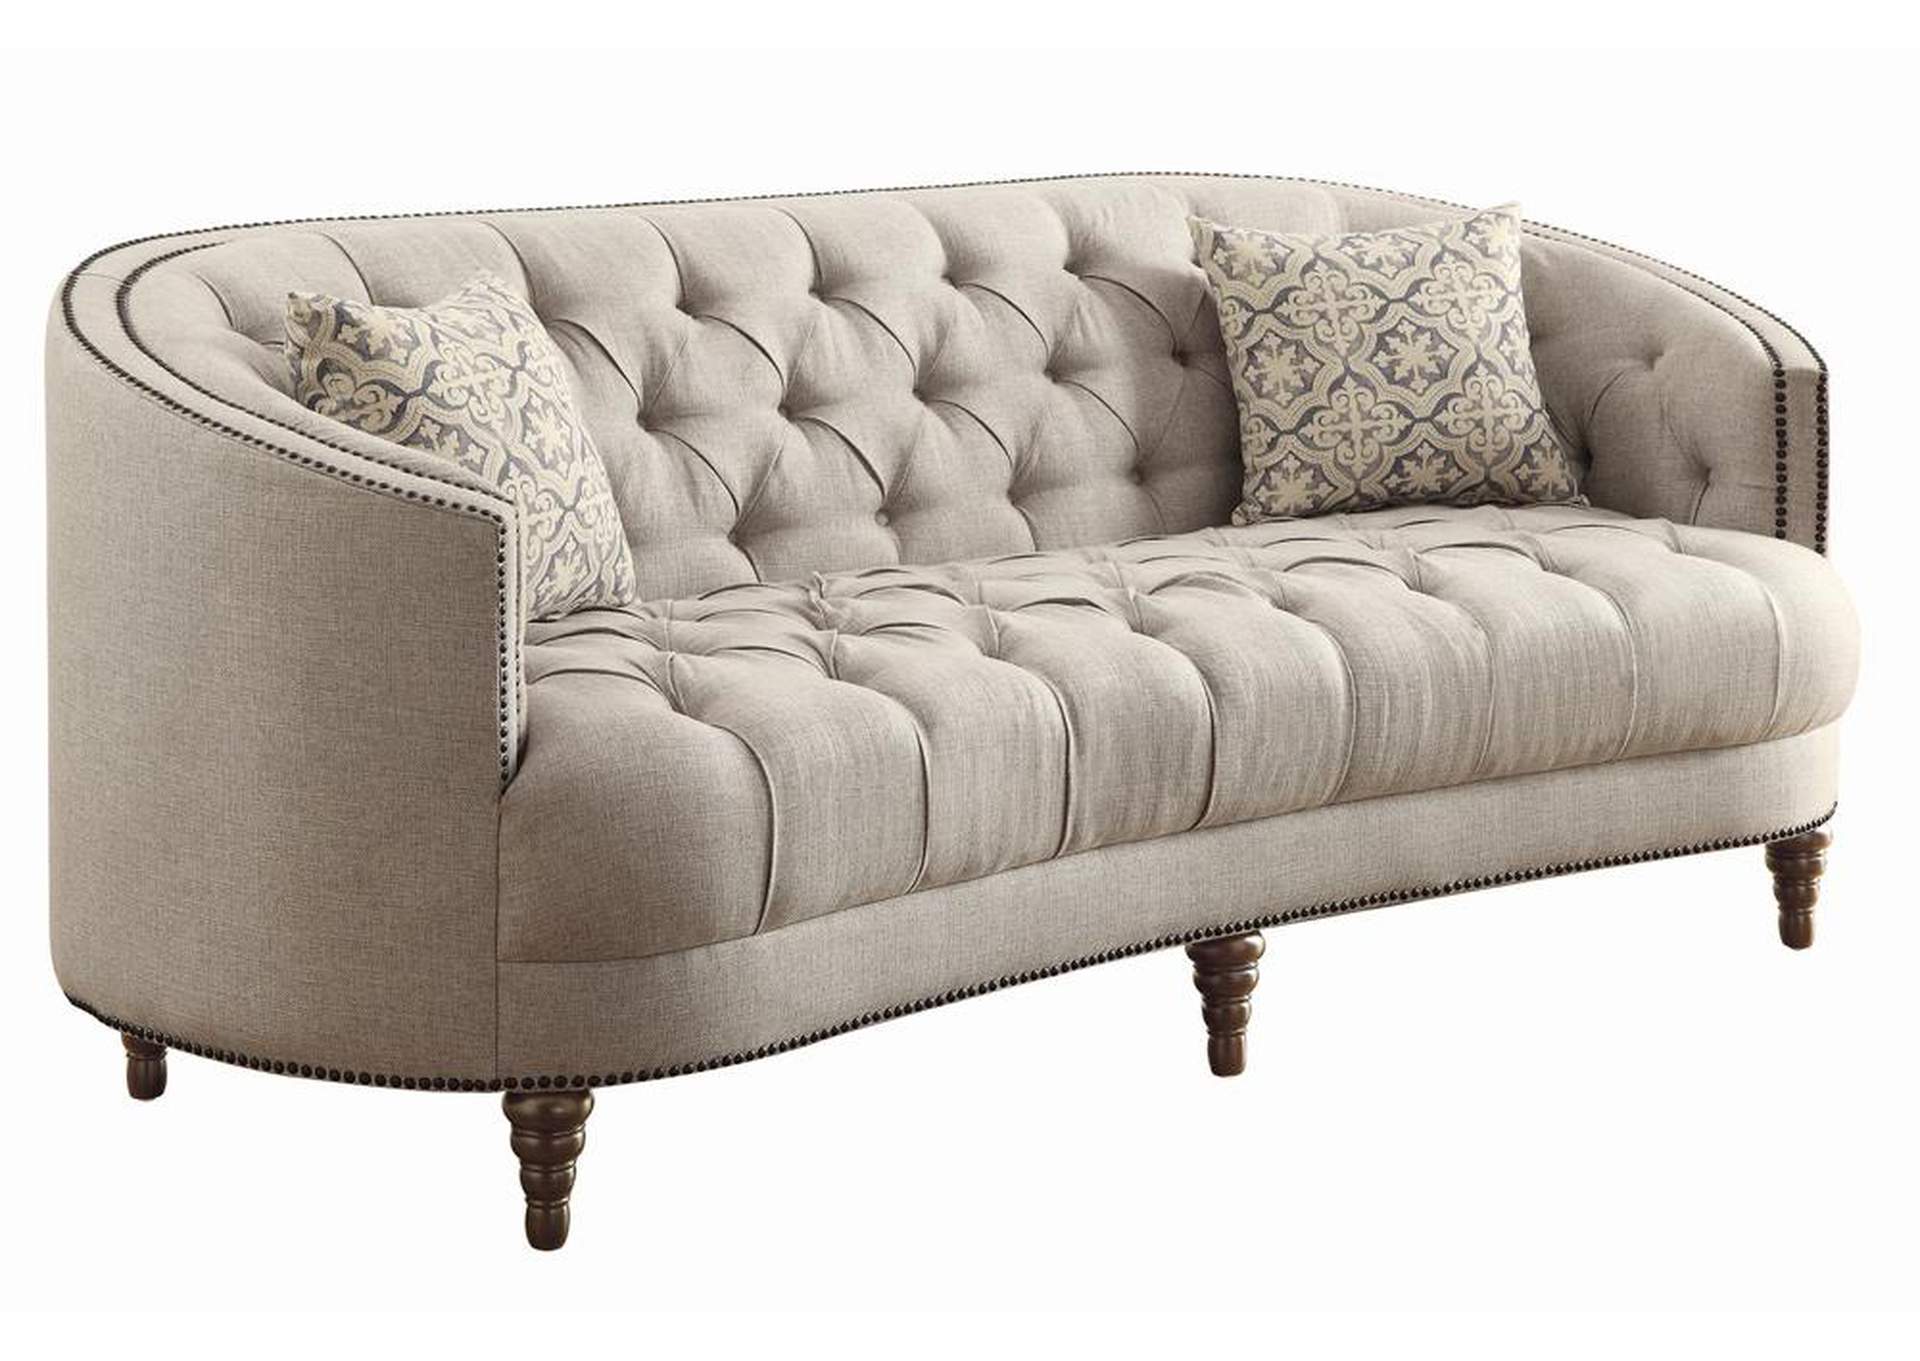 Avonlea Traditional Beige Sofa,Coaster Furniture